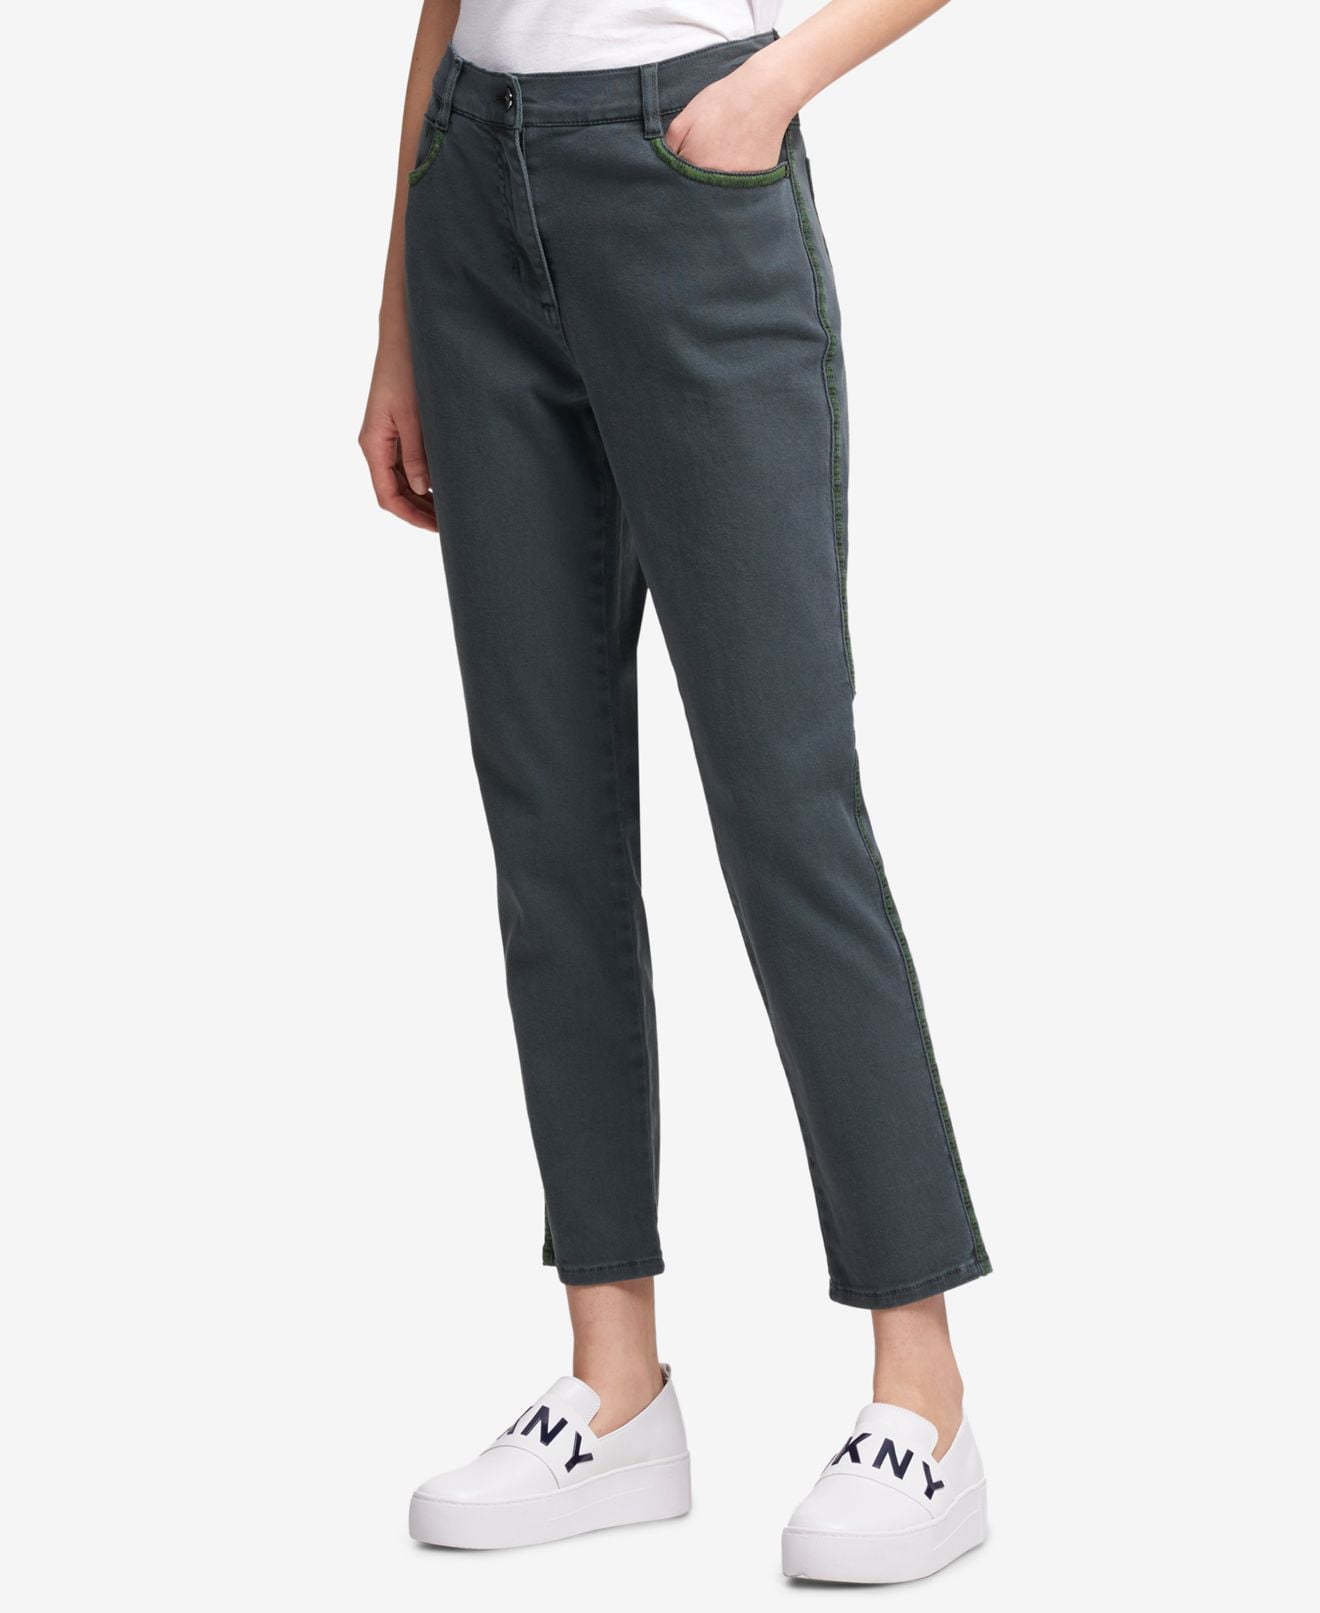 DKNY - Dark Womens Embroidered-Trim Stretch Jeans 30 - Walmart.com ...